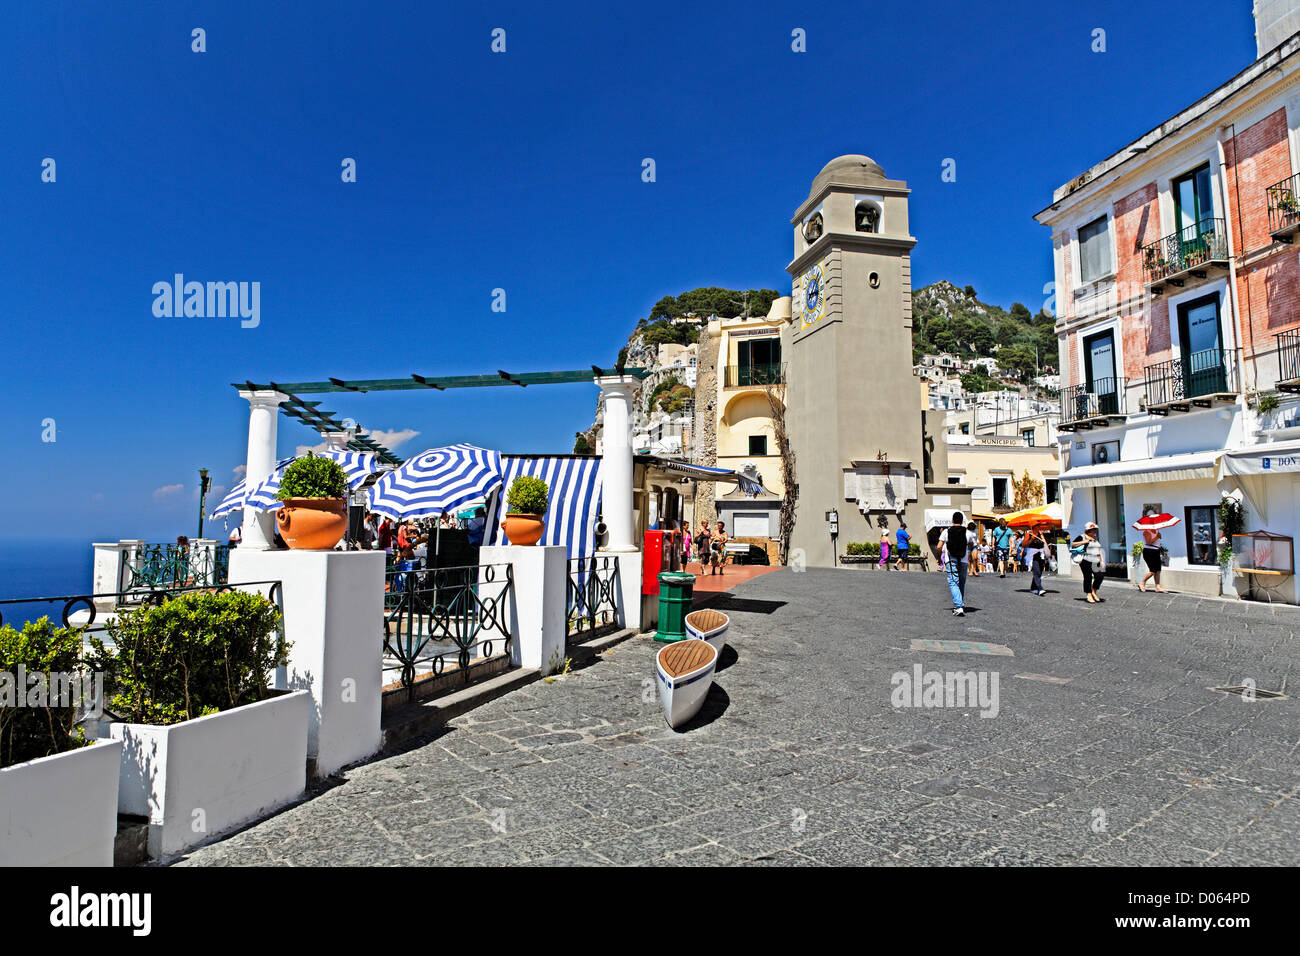 Piazza Ignazio Ciero, Capri, Campanie, Italie Banque D'Images